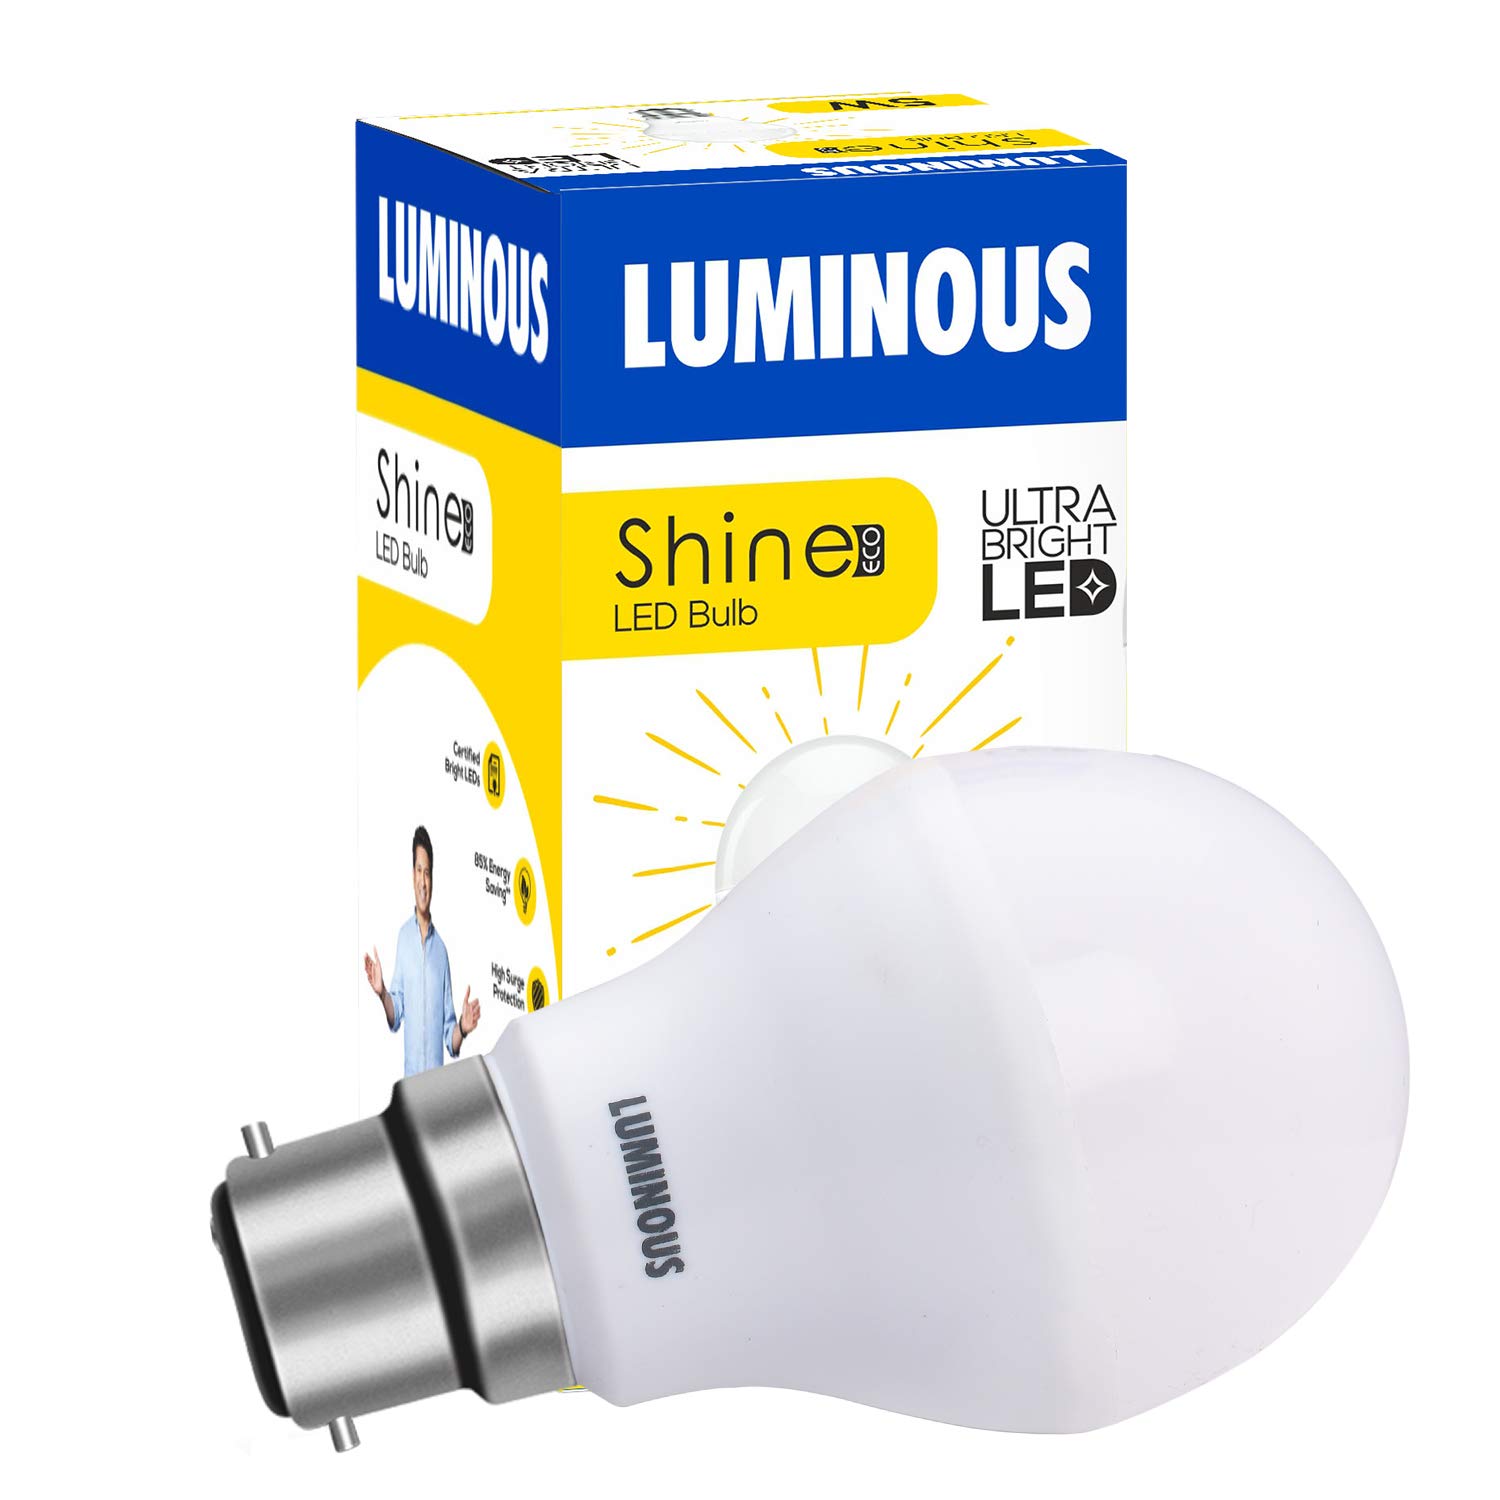 Luminous 9W Led Bulb